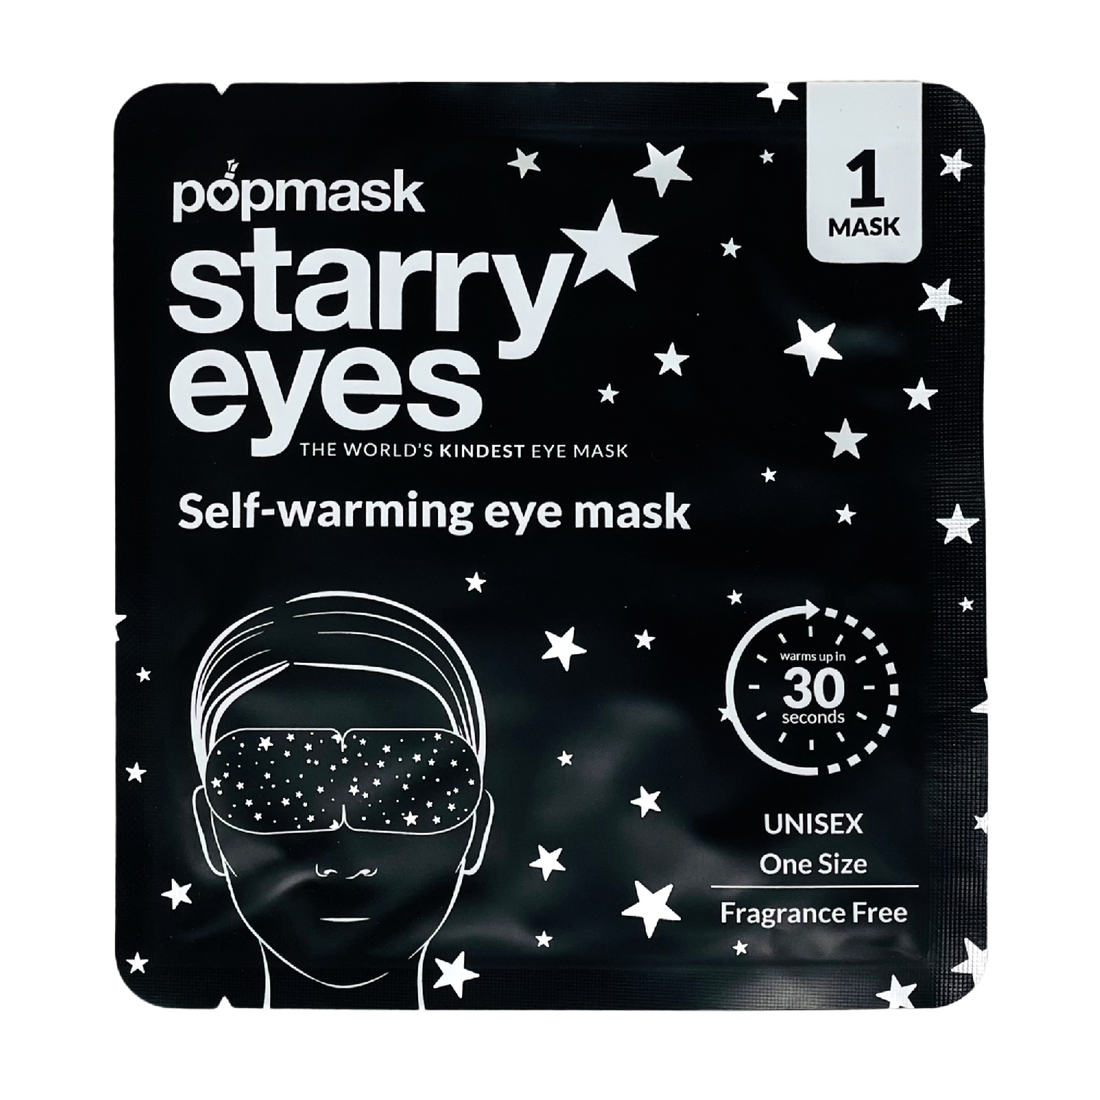 Popmask Starry Eyes Warming Eye Mask